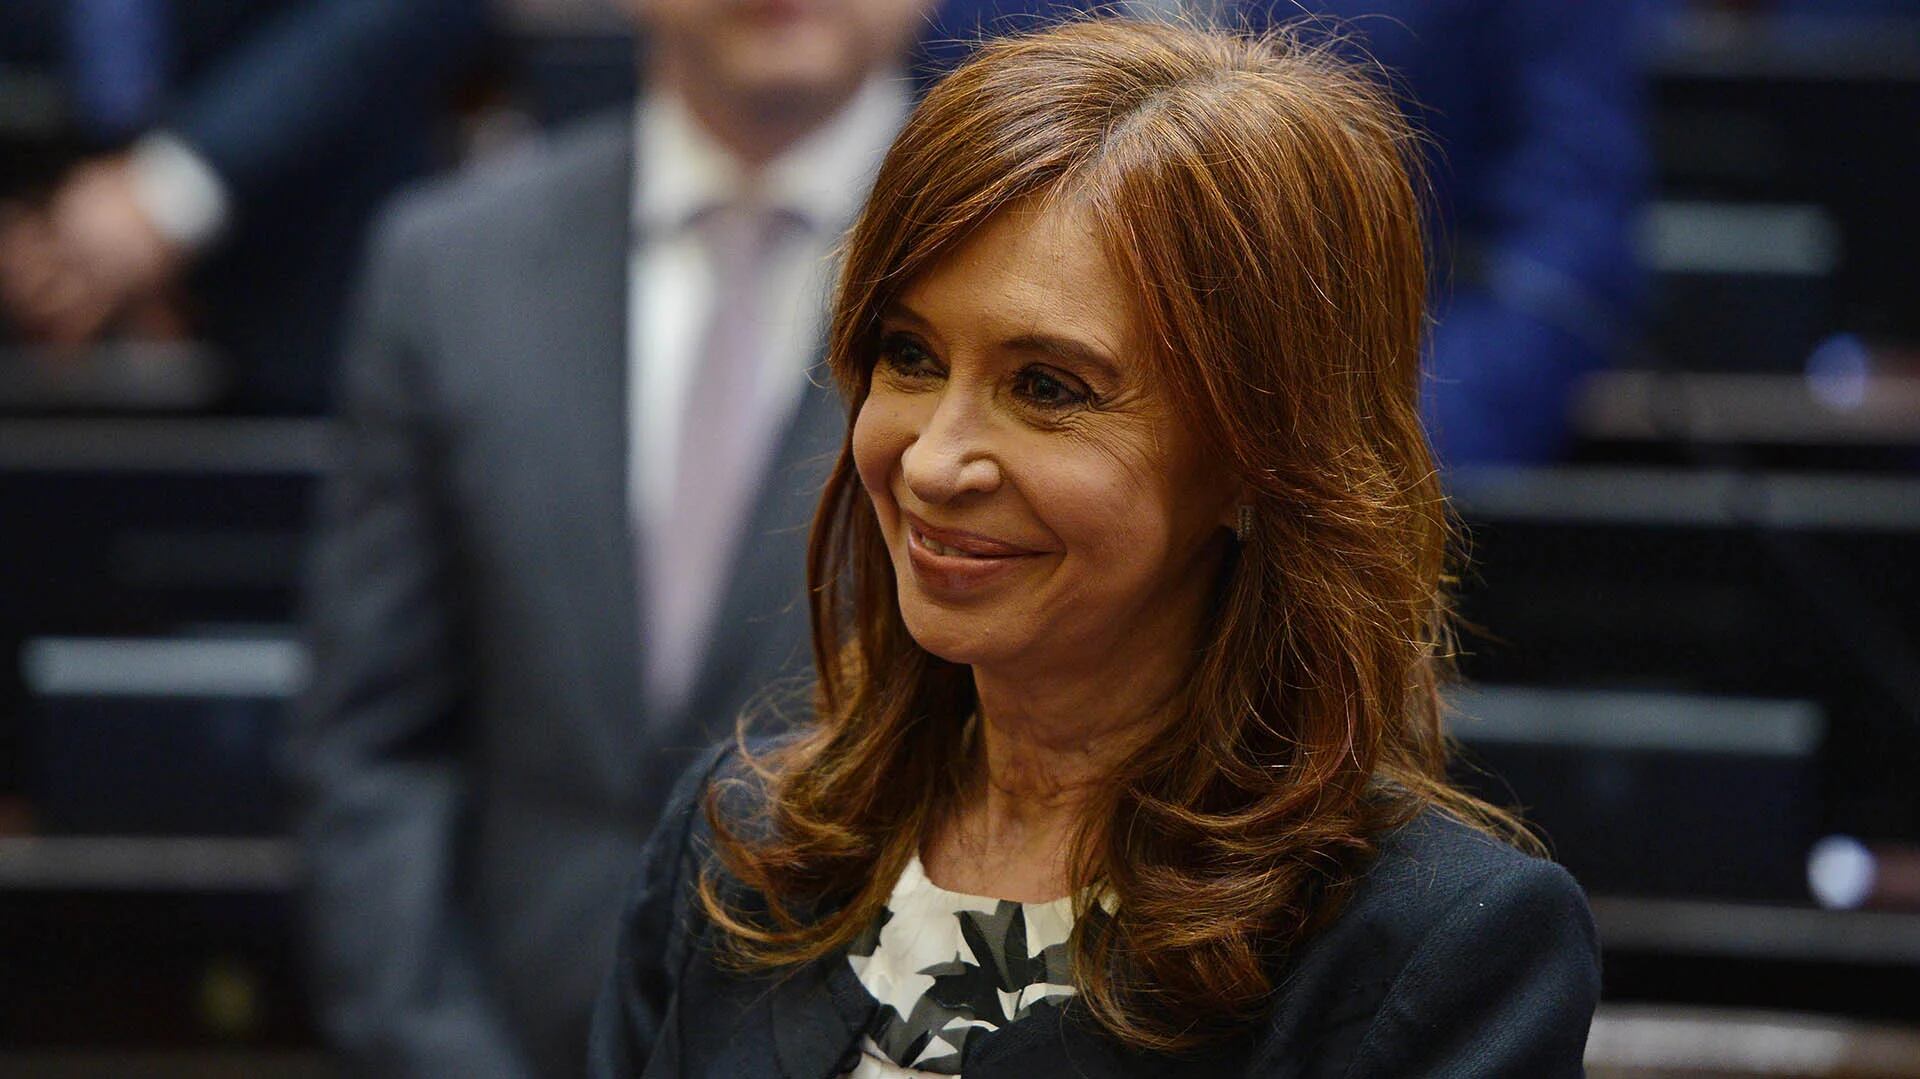 Jura de Cristina Kirchner en el Senado  (Fotos: Gabriel Cano / Pablo Grinberg / Charly Diaz Azcue / Comunicacion Senado)